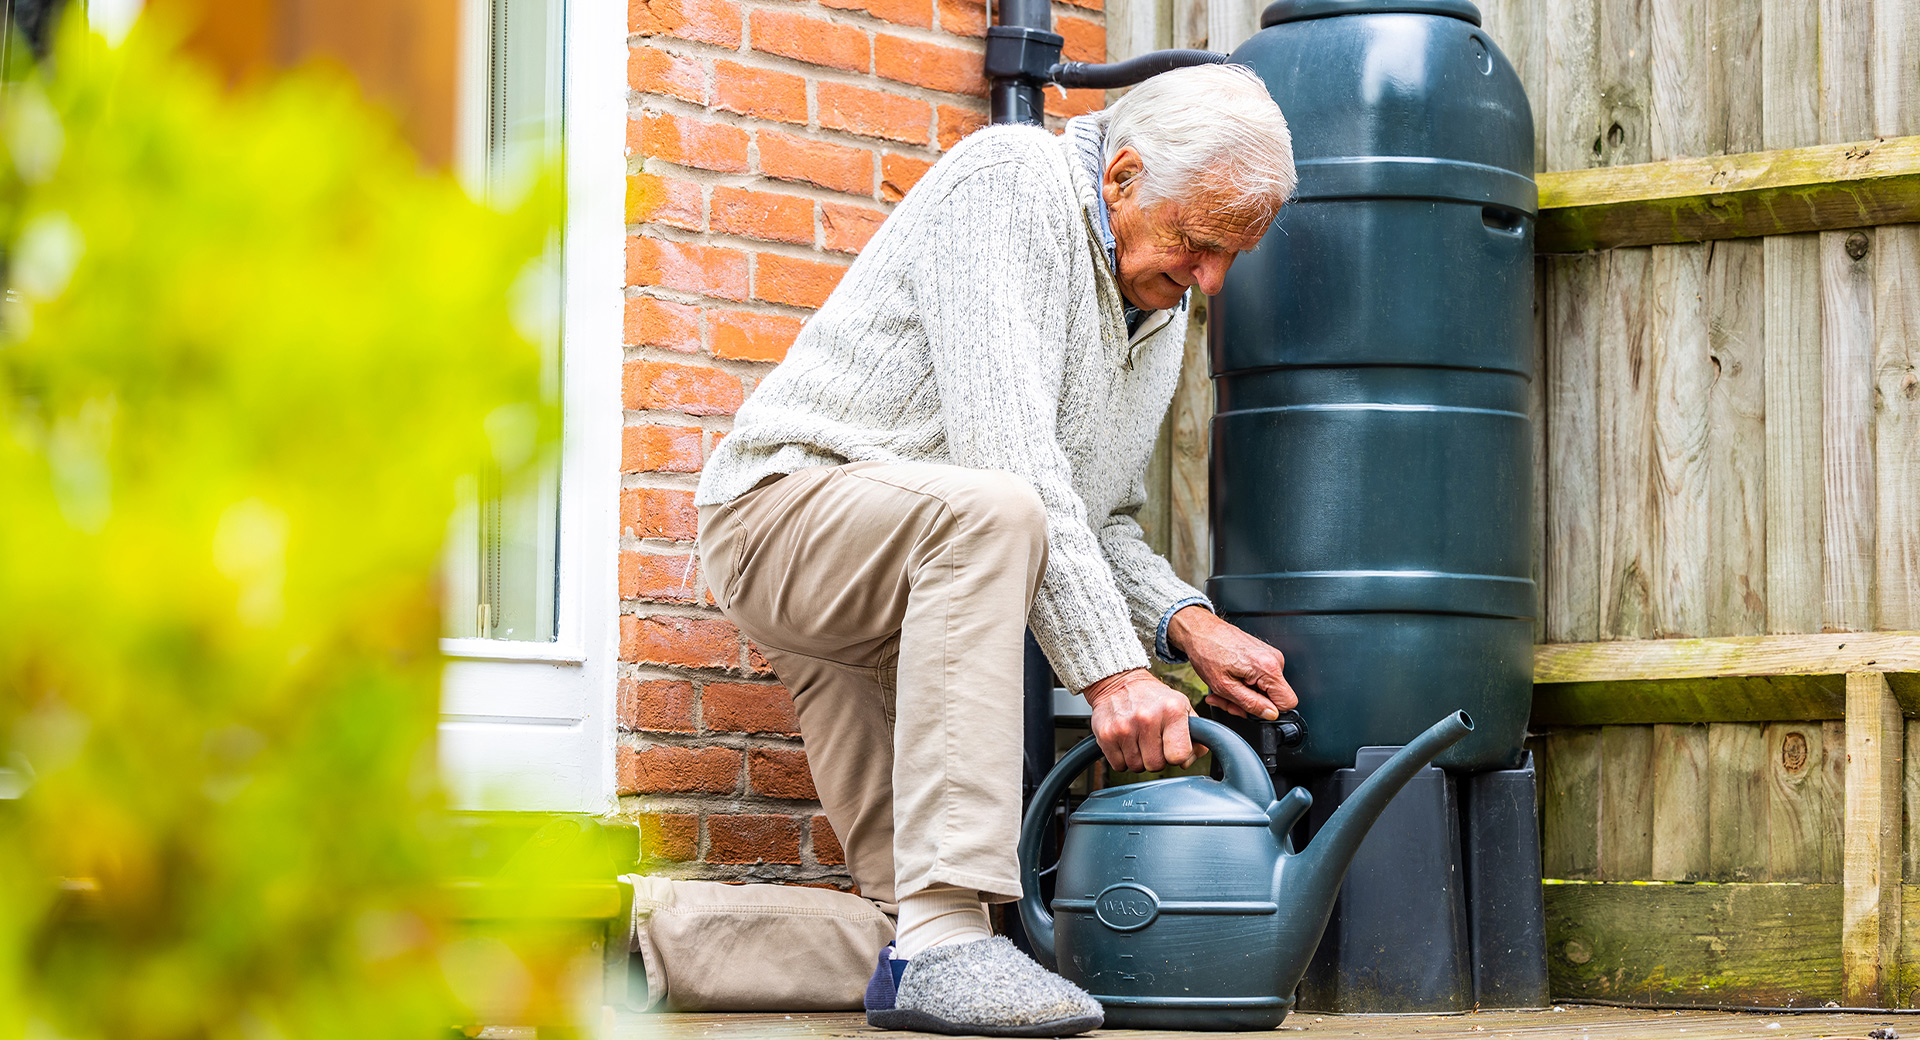 Elderly customer filling watering can
                        